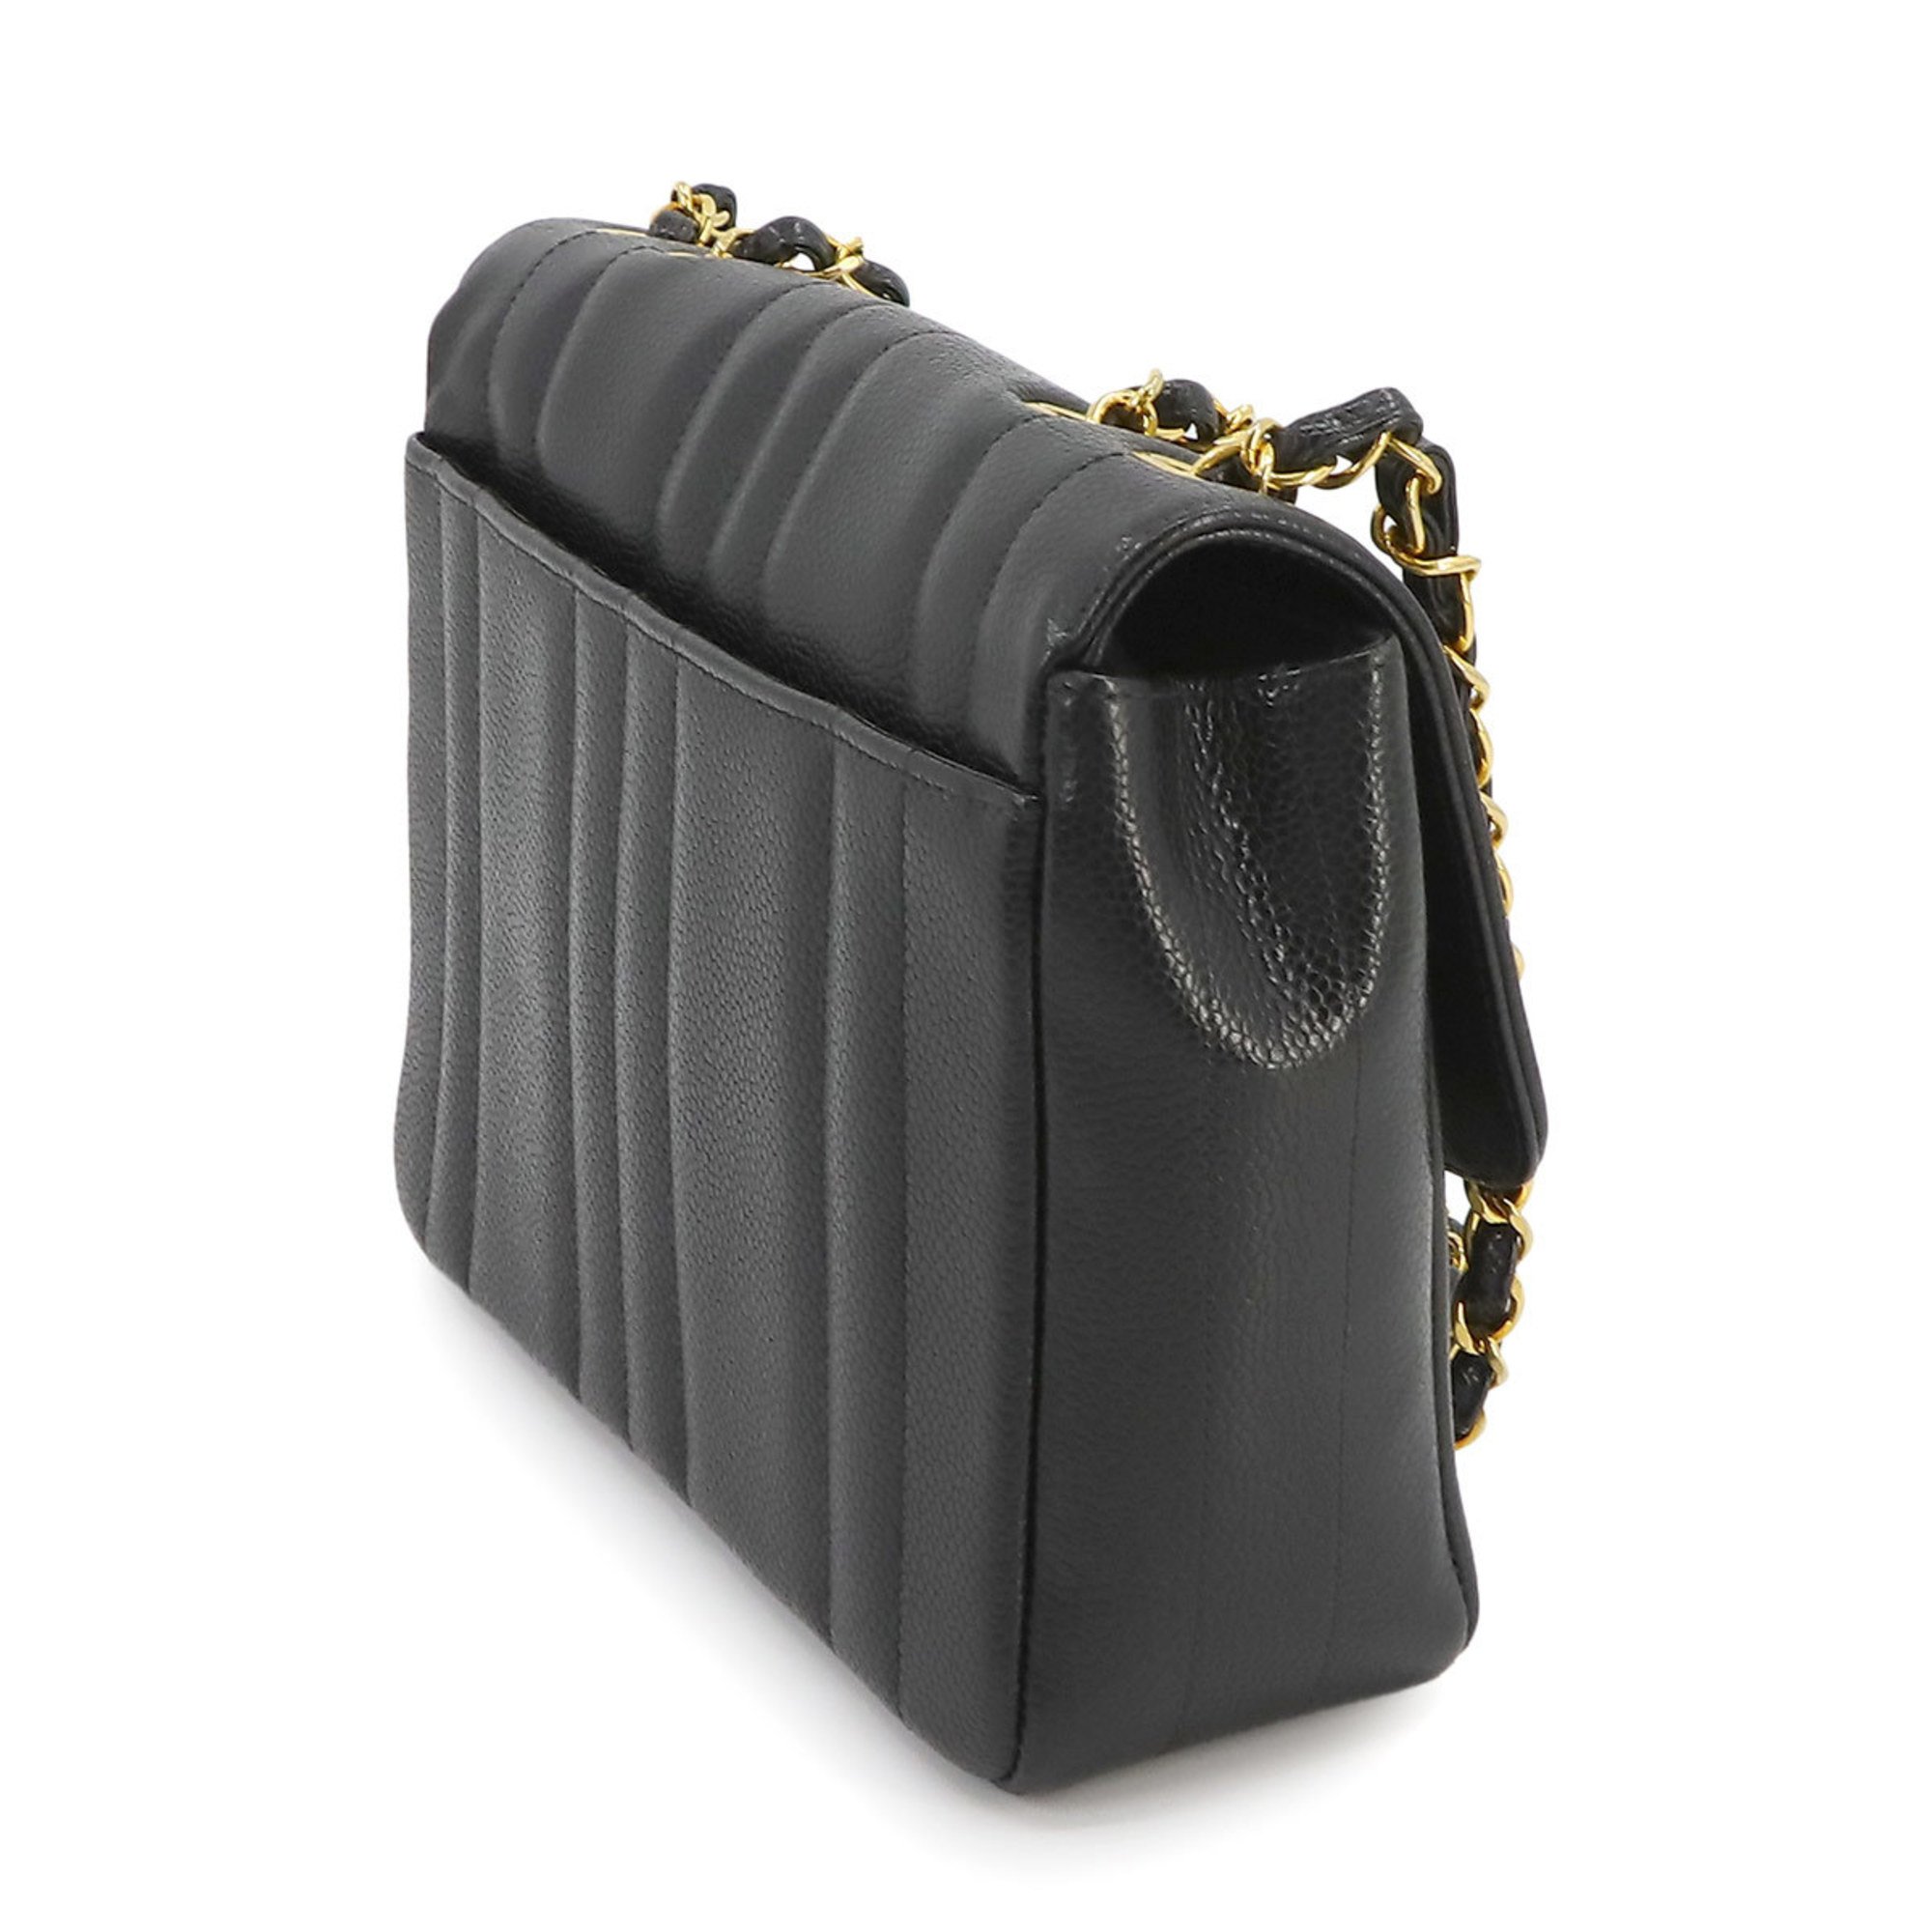 CHANEL Mademoiselle Chain Shoulder Bag Caviar Skin Black Coco Mark Gold Hardware